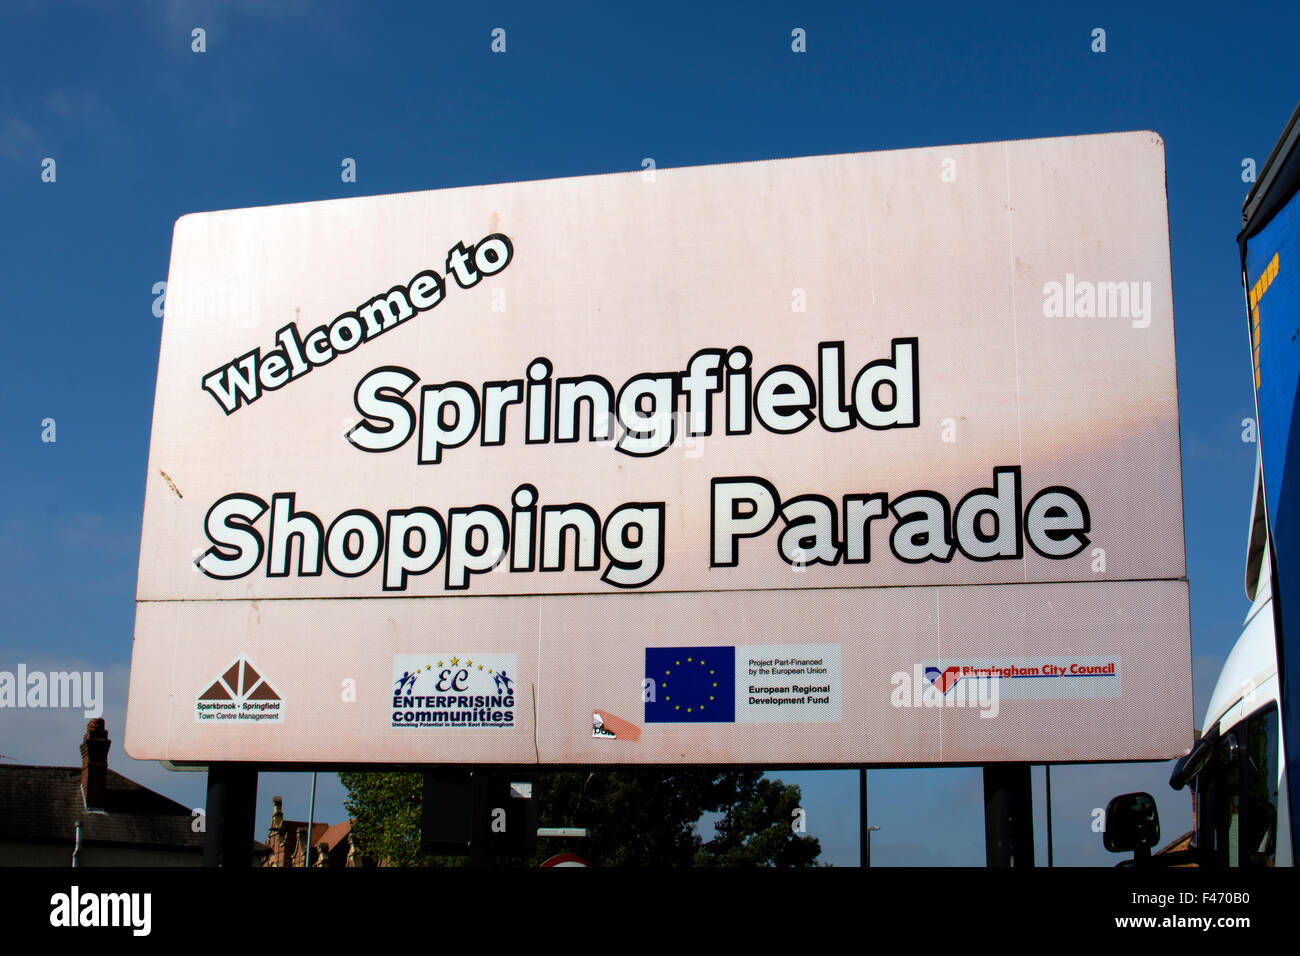 Springfield Shopping Parade sign, Sparkhill, Birmingham, UK Stock Photo